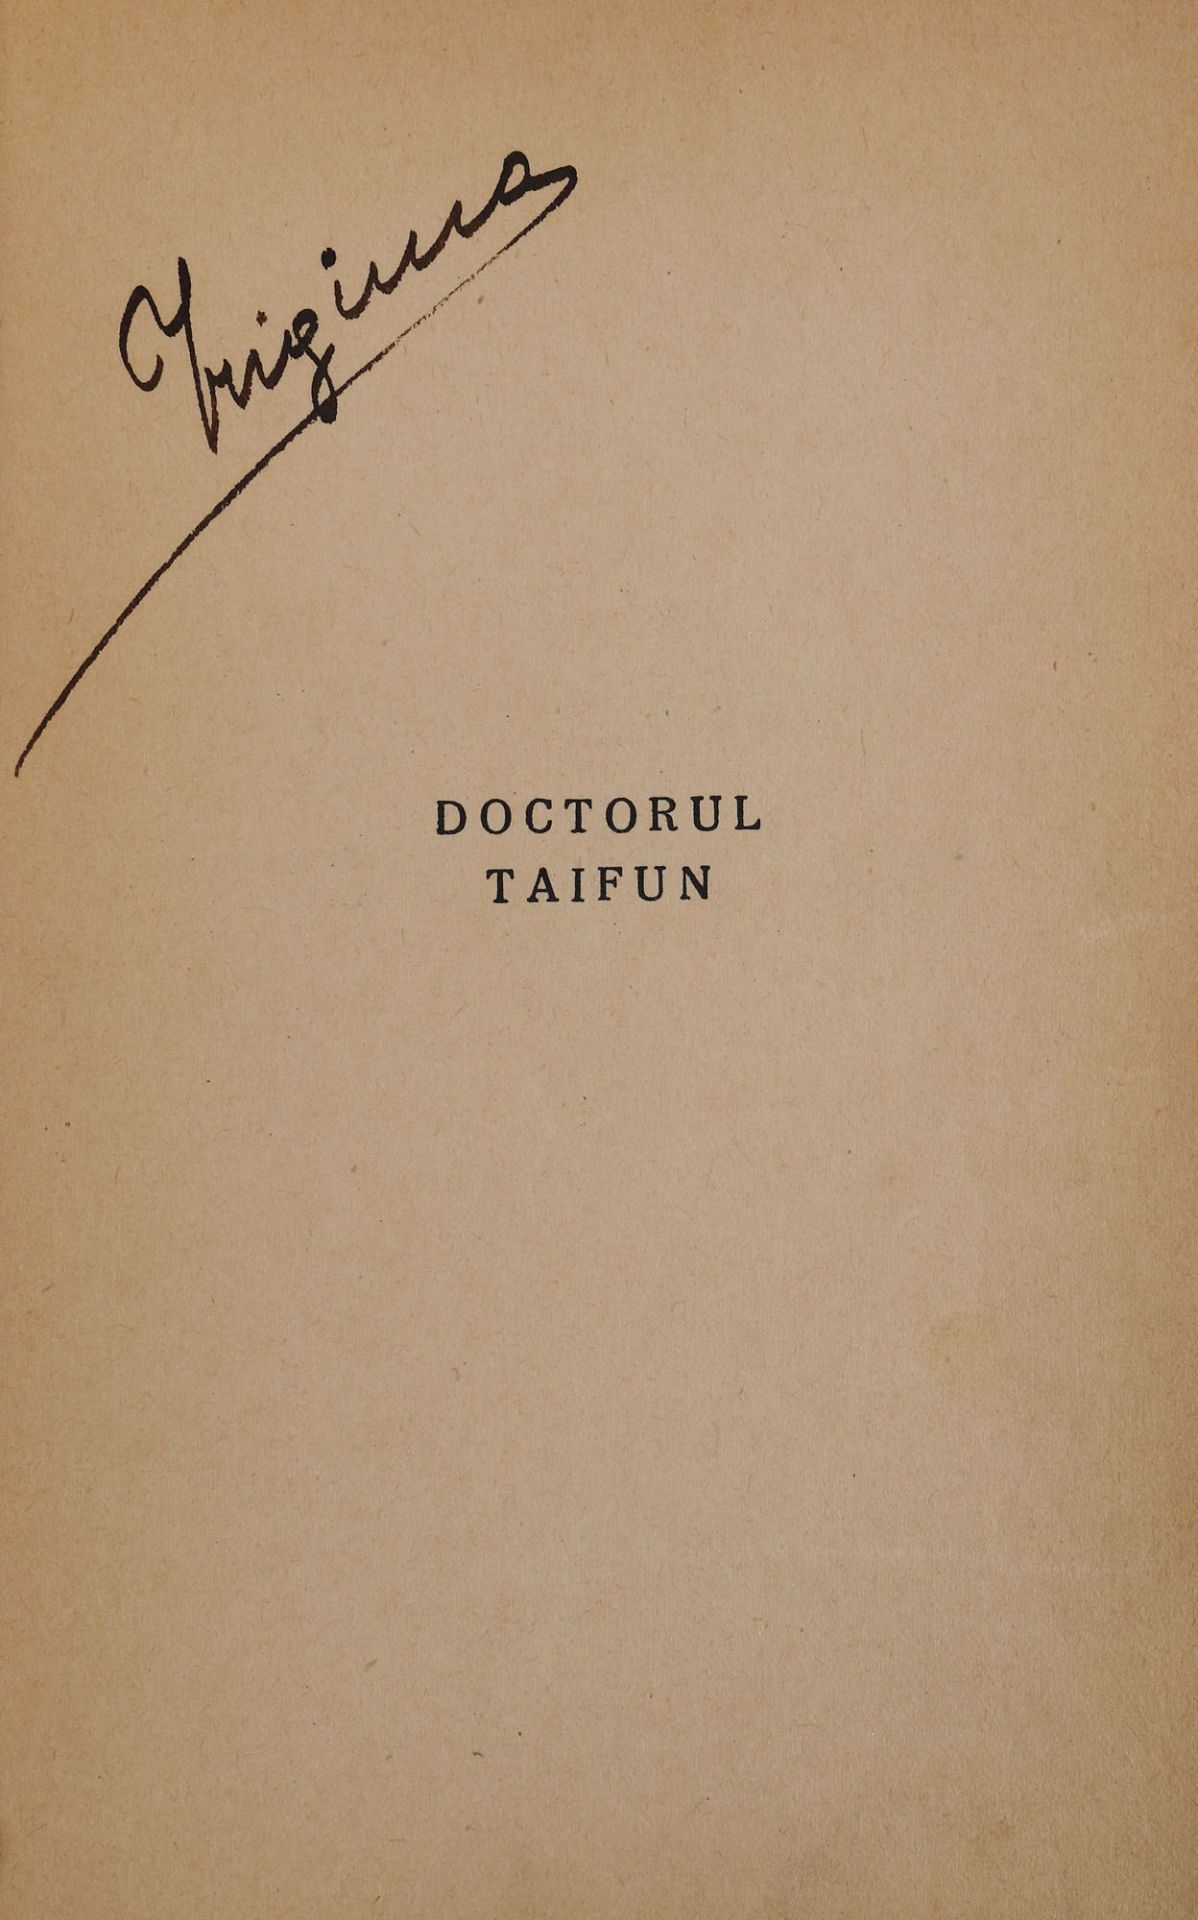 "Doctorul Taifun", by Gala Galaction, editio princeps, Bucharest, 1933, with the author's dedication - Image 3 of 4